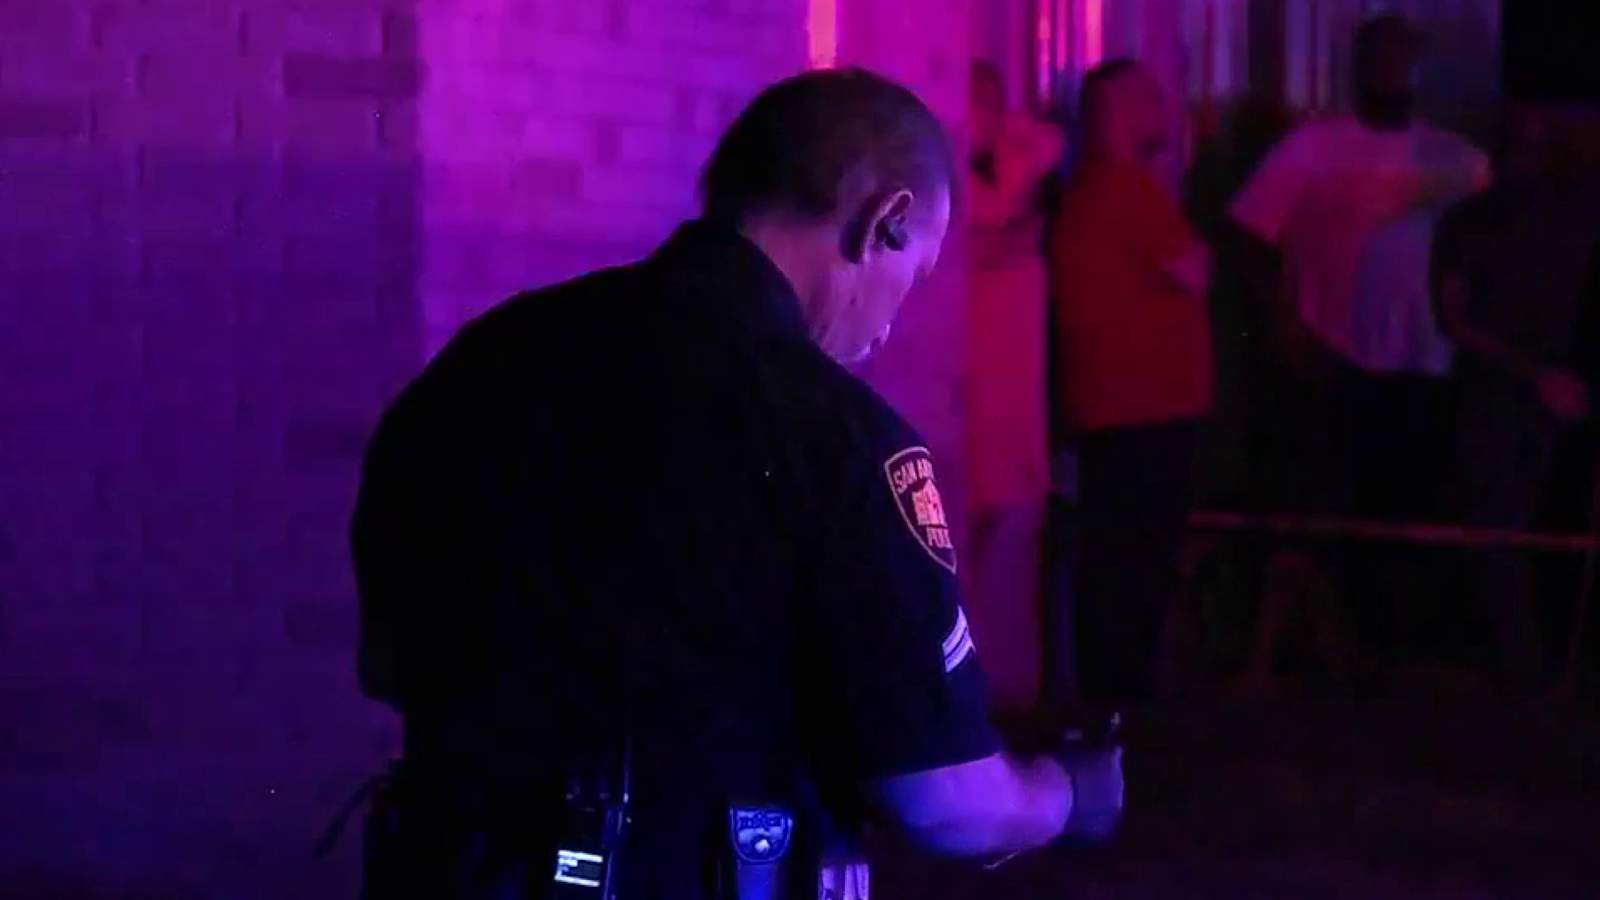 San Antonio police ask for publics help following weekend of violence, shootings